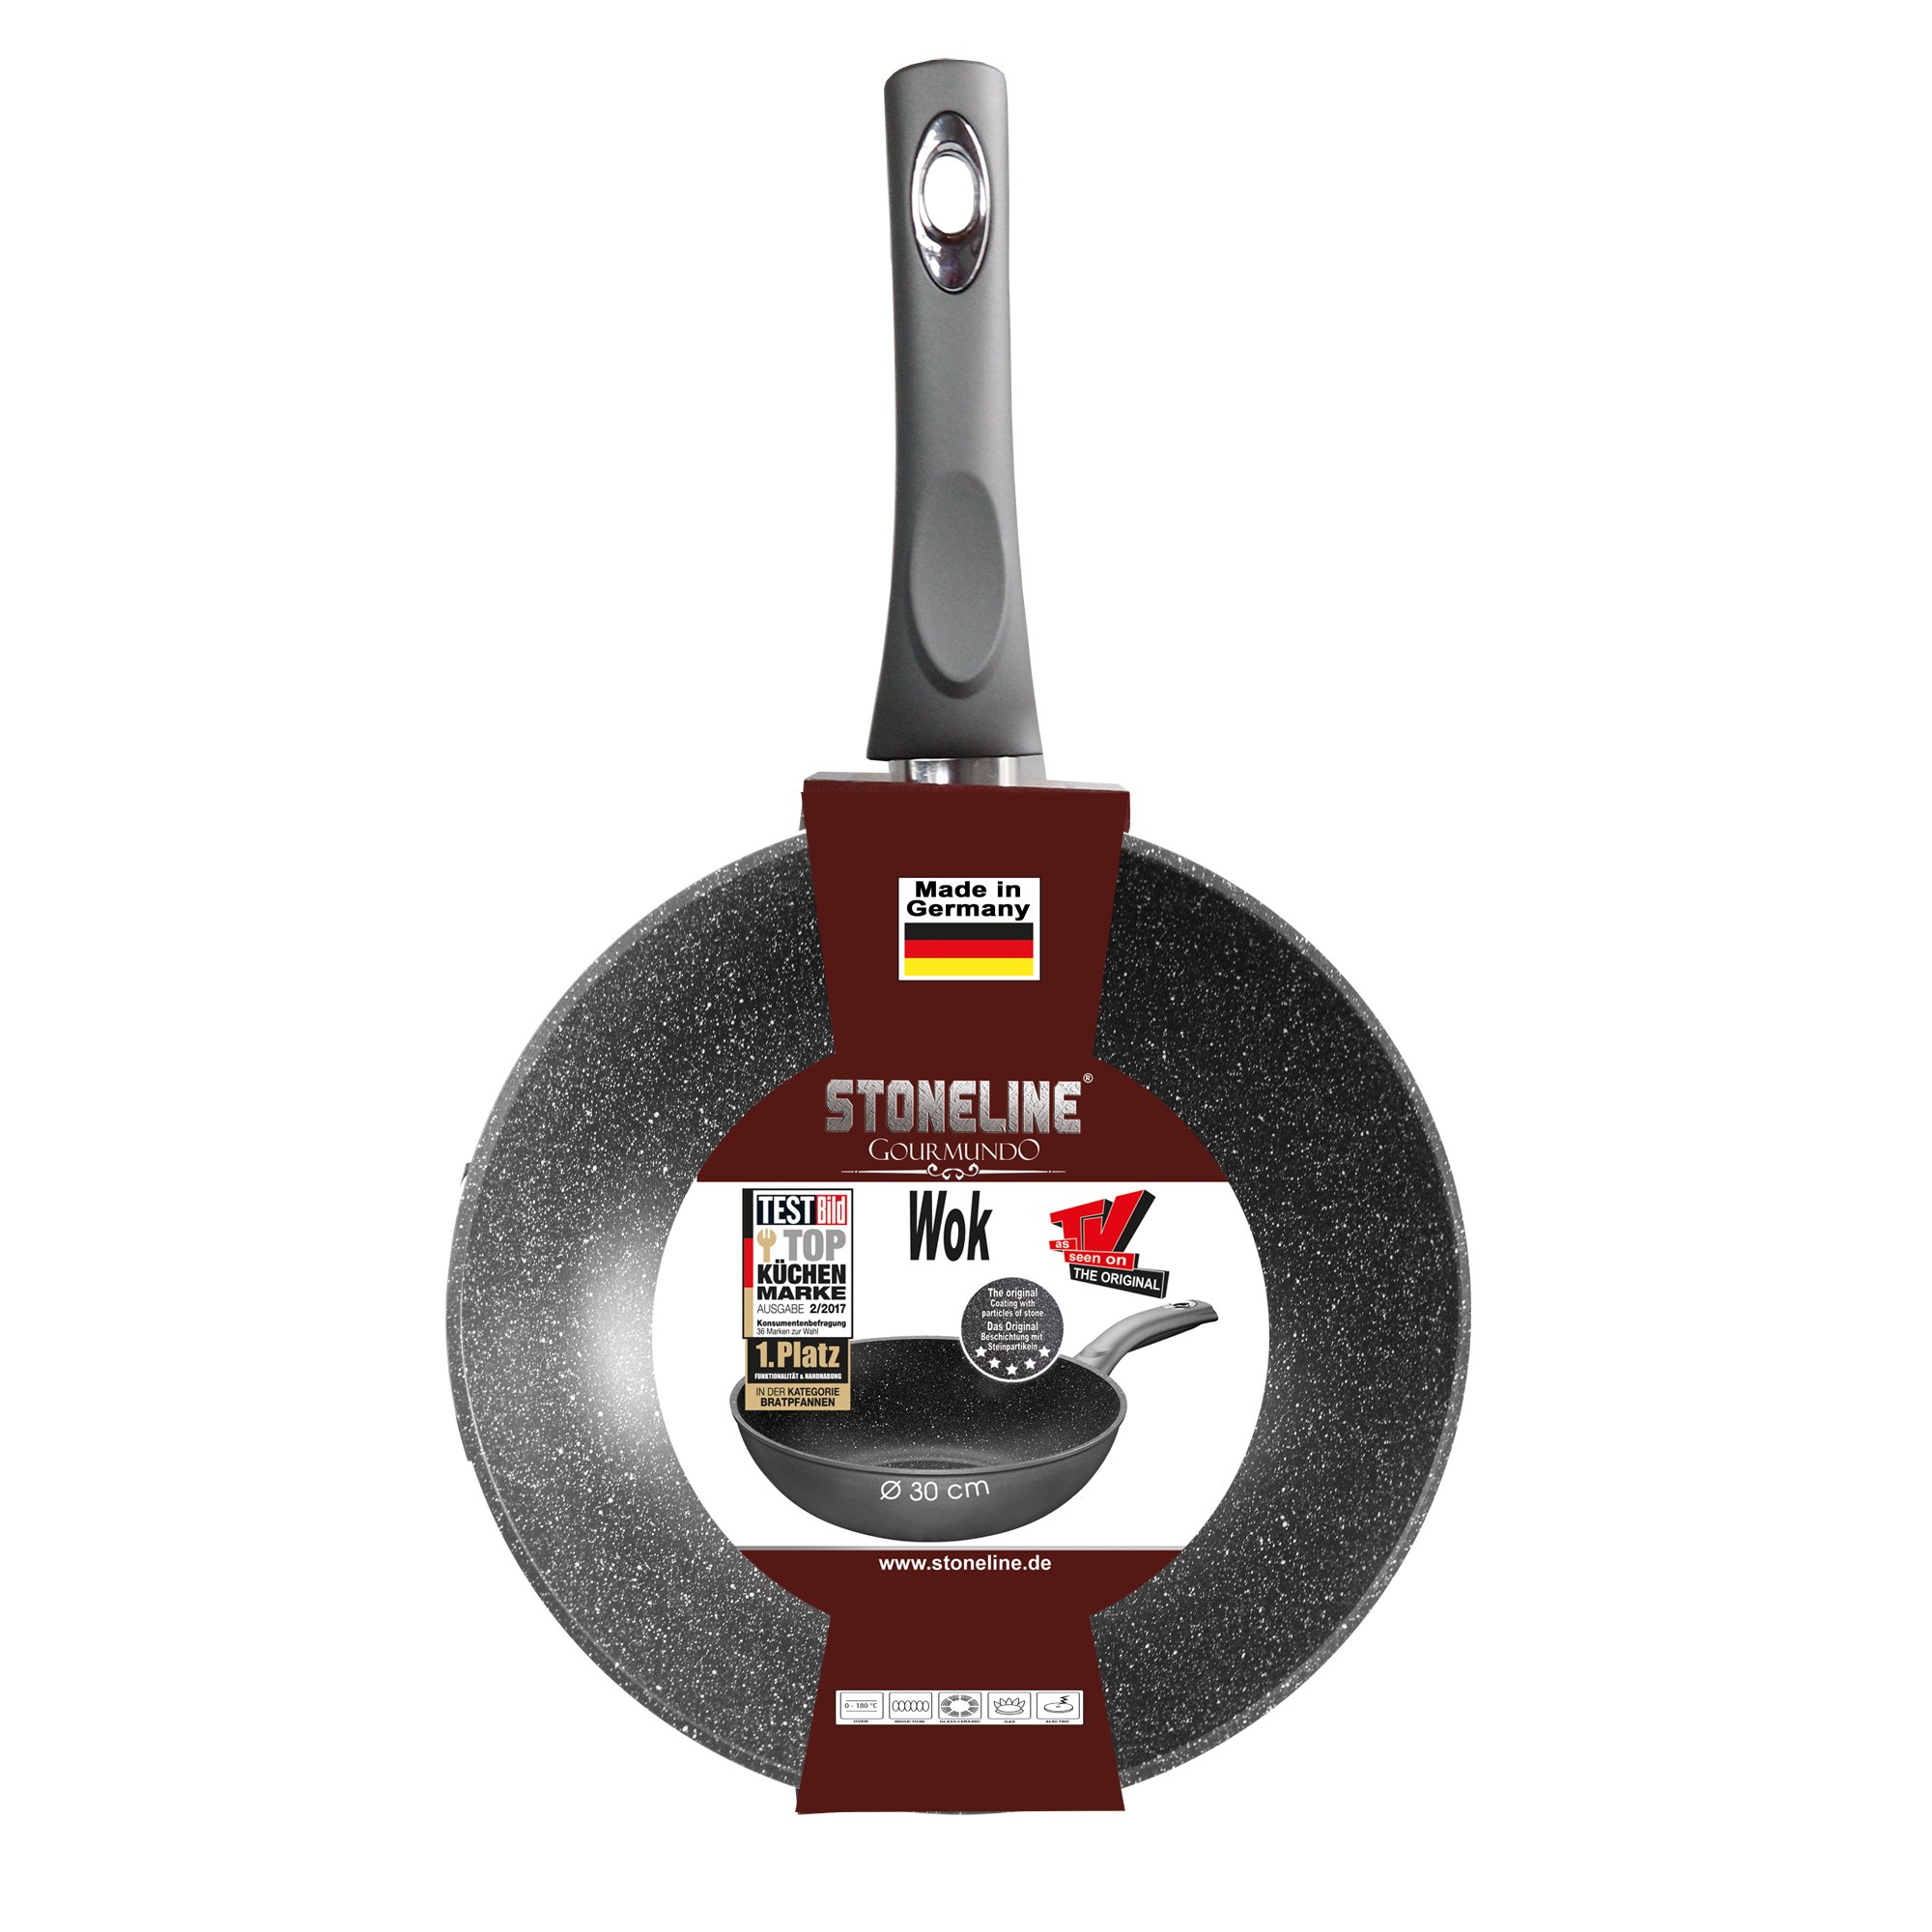 STONELINE® Wok Pan 30 cm, Non-Stick Pan | Made in Germany | GOURMUNDO